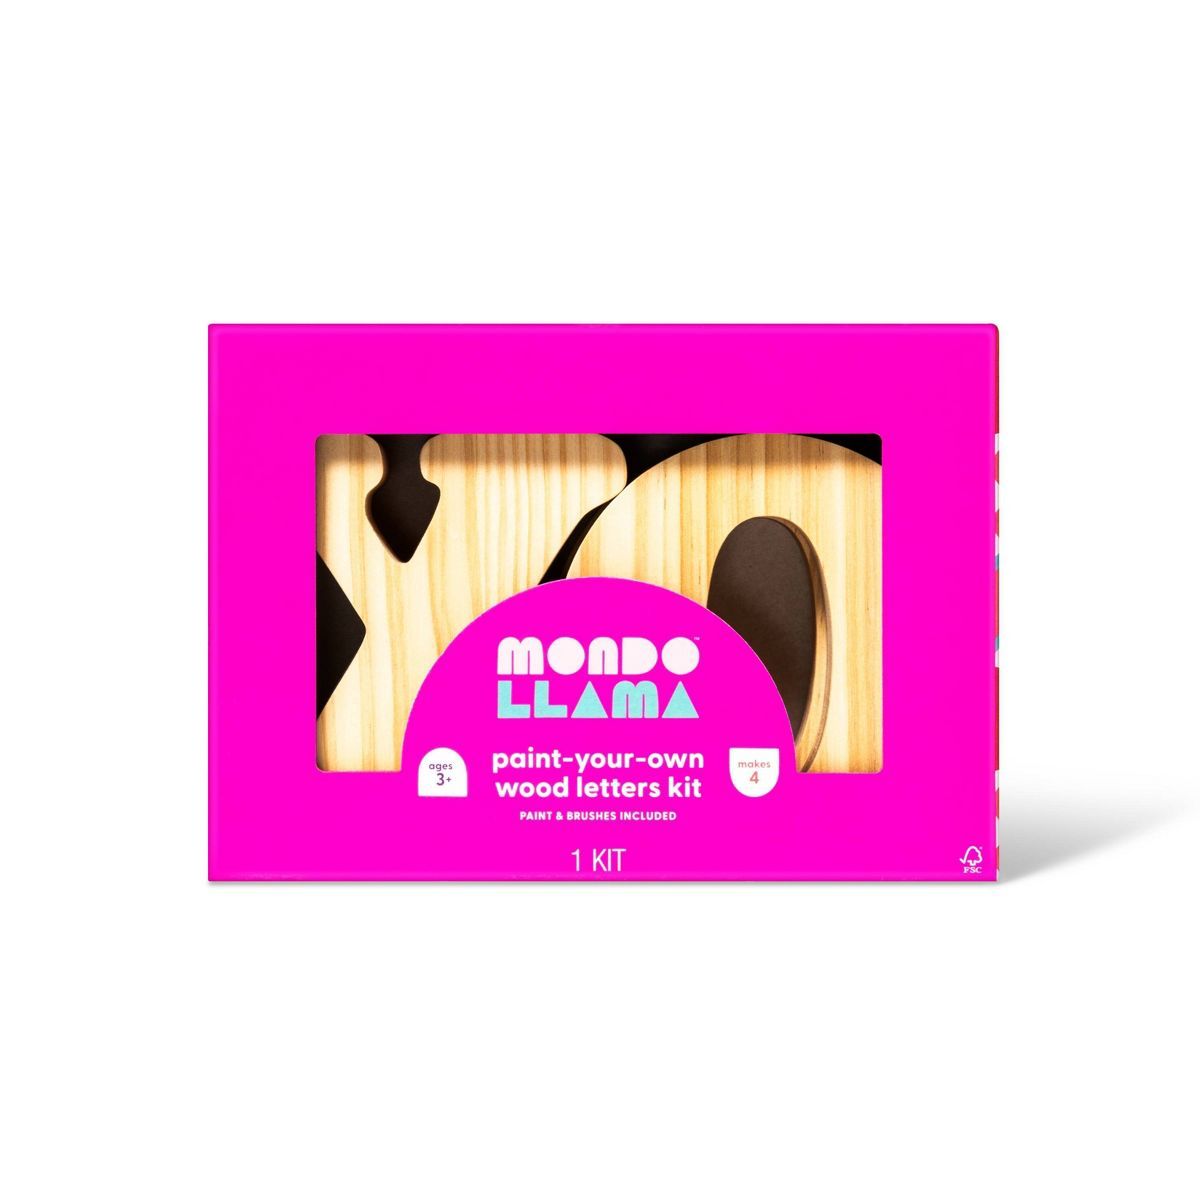 Paint-Your-Own Valentine's Day Wood Craft XOXO Kit - Mondo Llama™ | Target